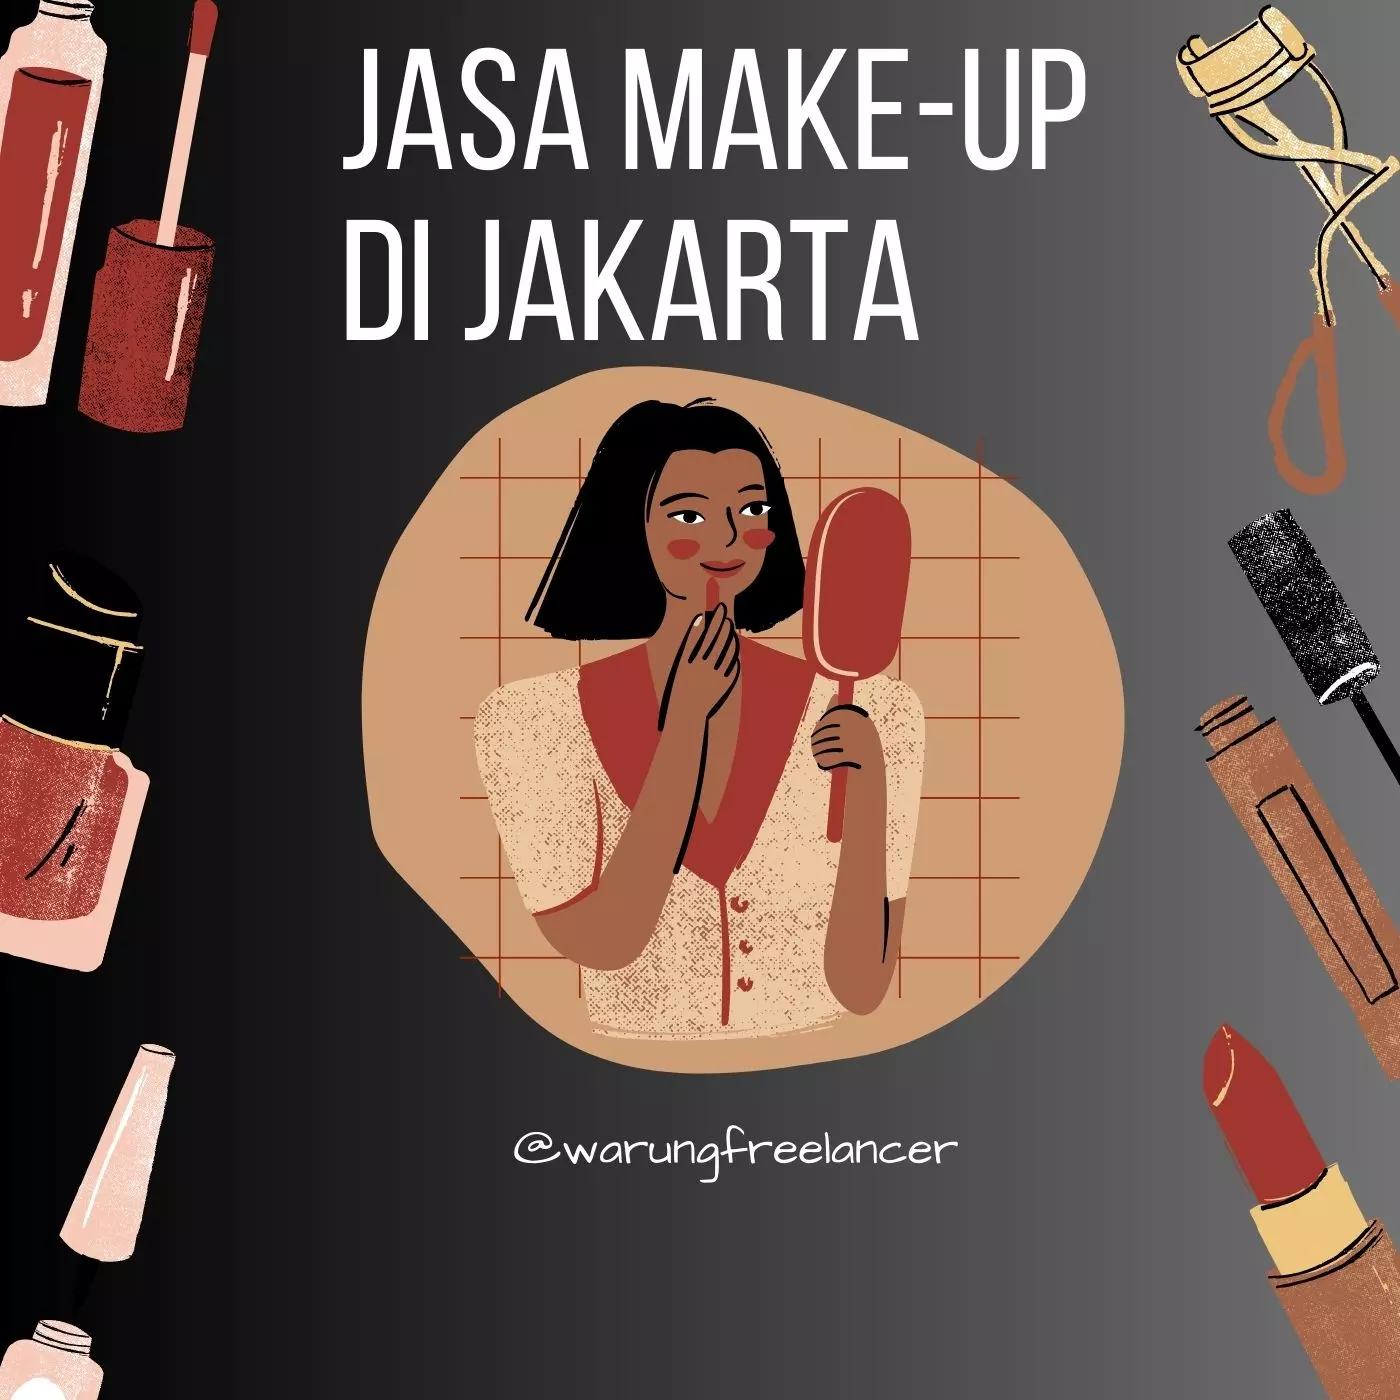 Make Up Services in Jakarta